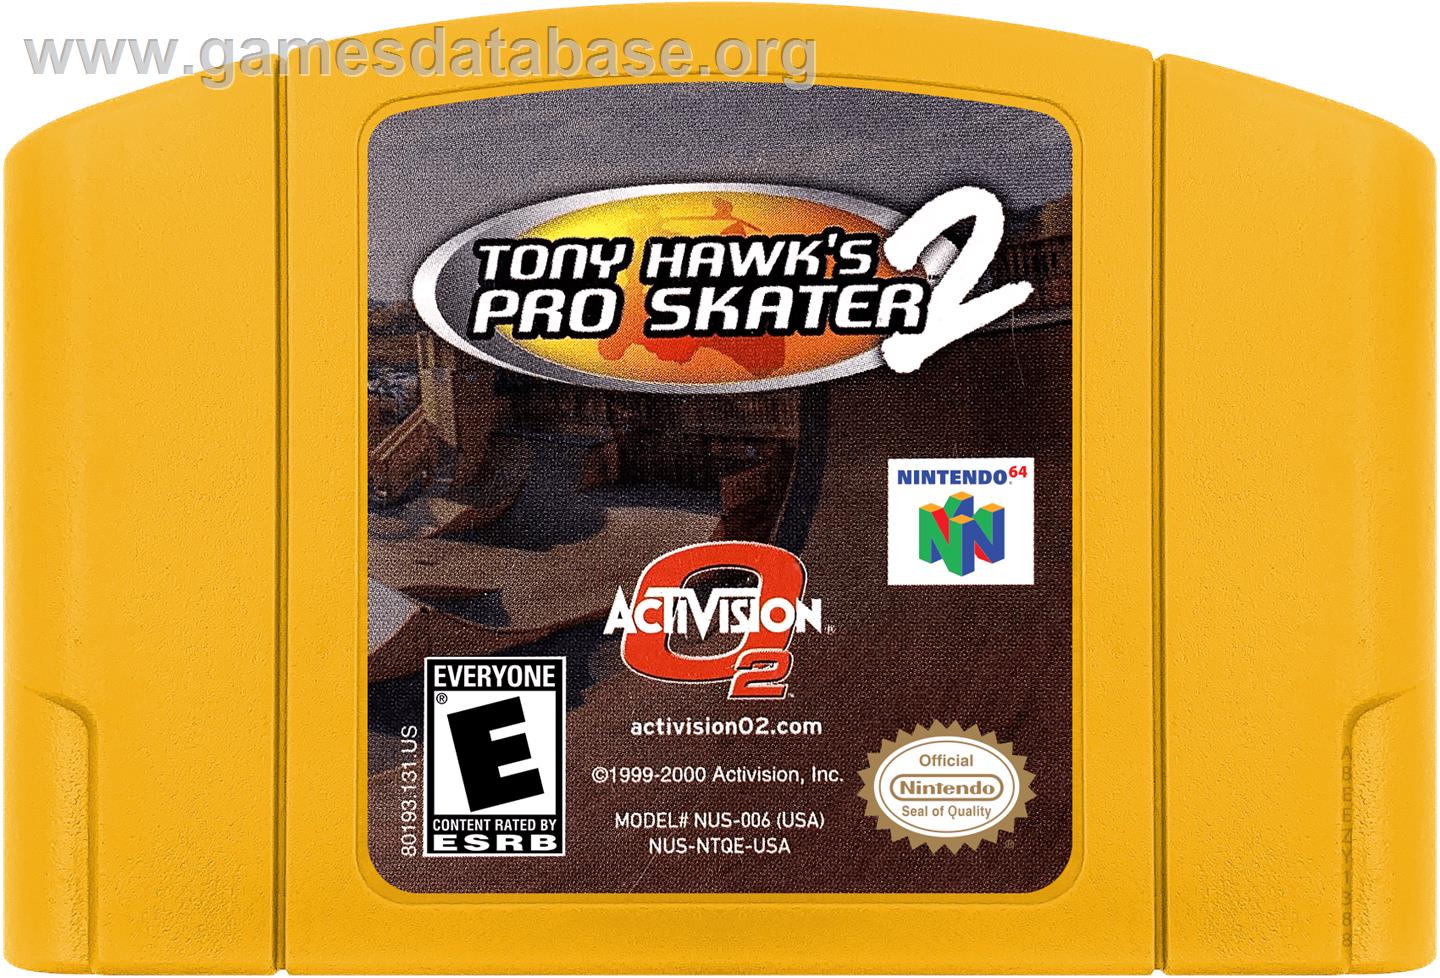 Tony Hawk's Pro Skater 2 - Nintendo N64 - Artwork - Cartridge